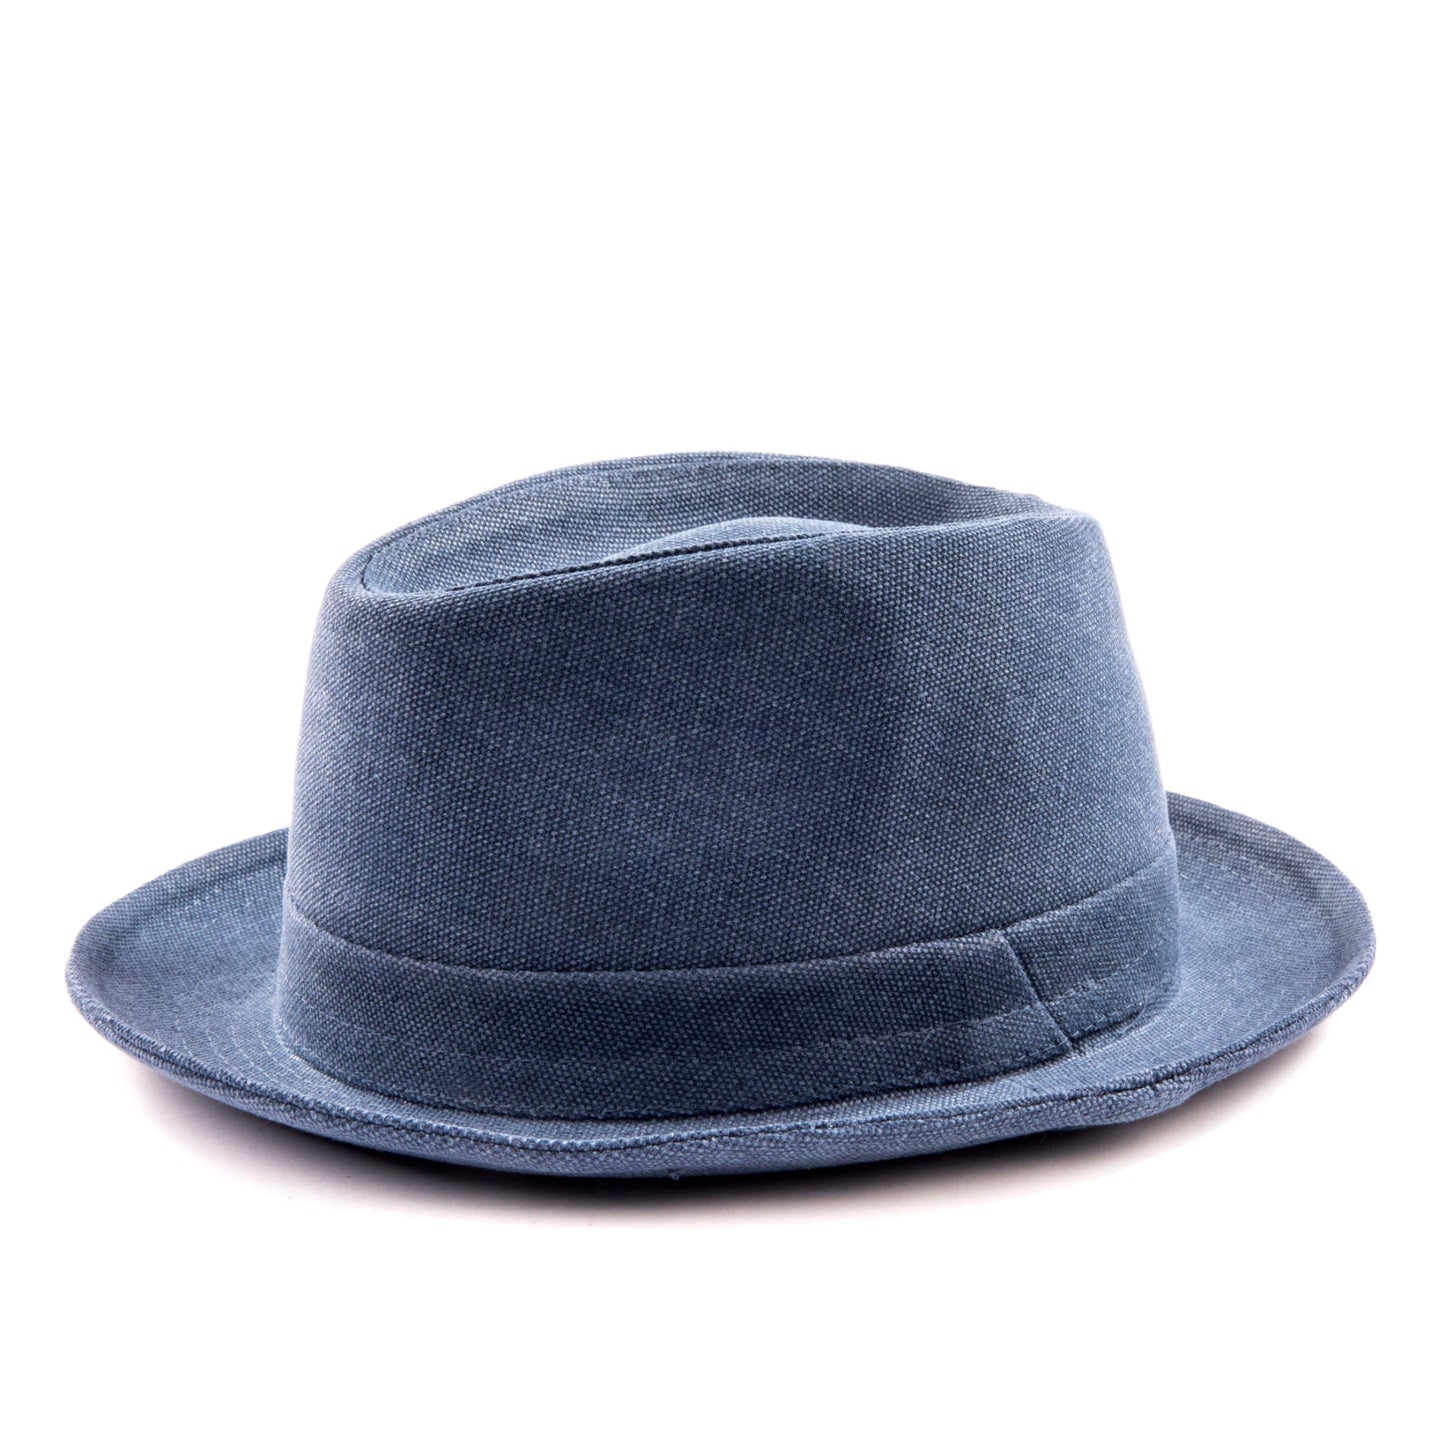 Faustmann fedora canvas hat blue